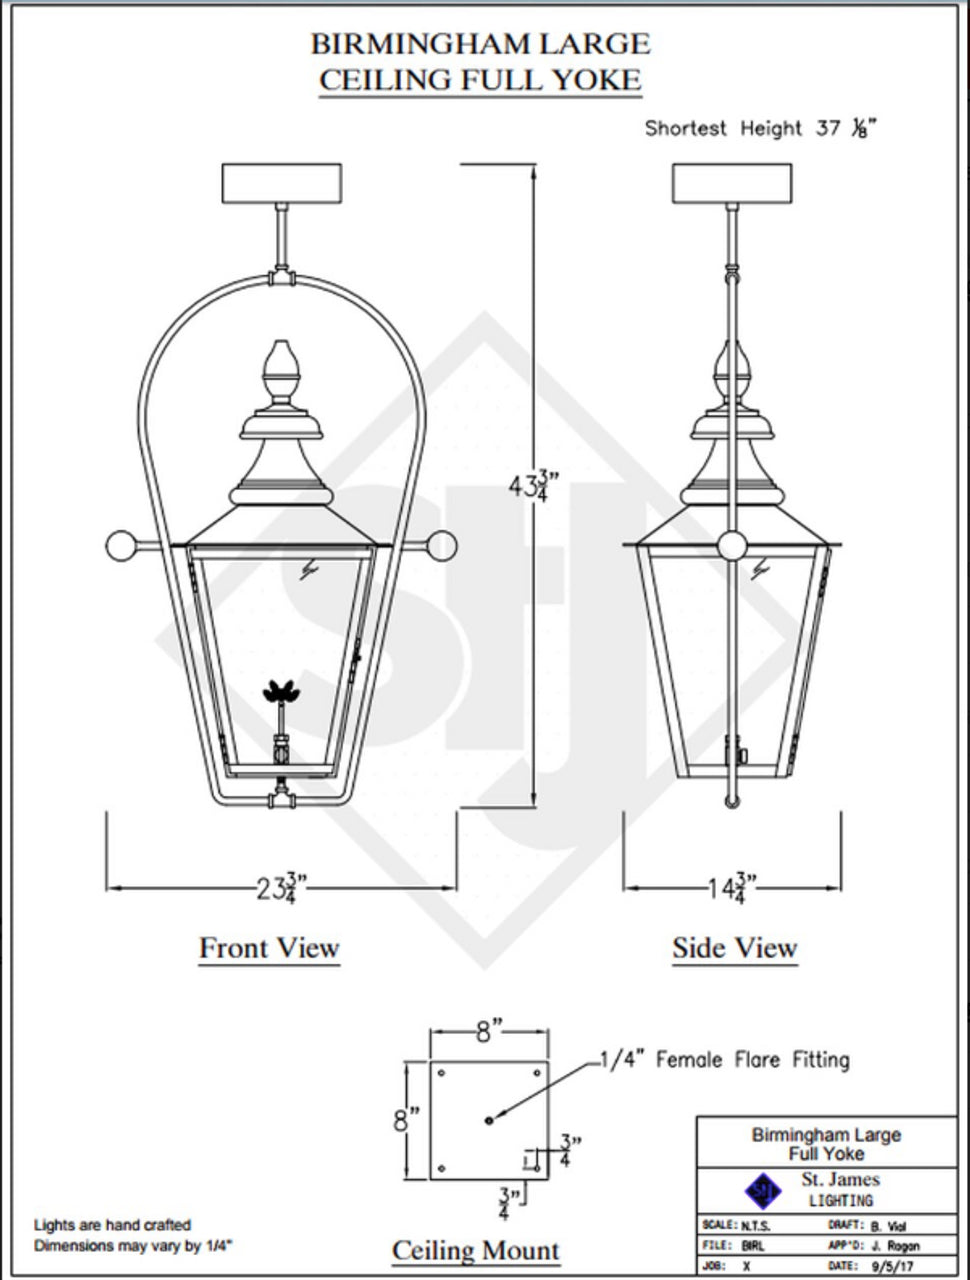 Line Drawings St. James Birmingham Lantern